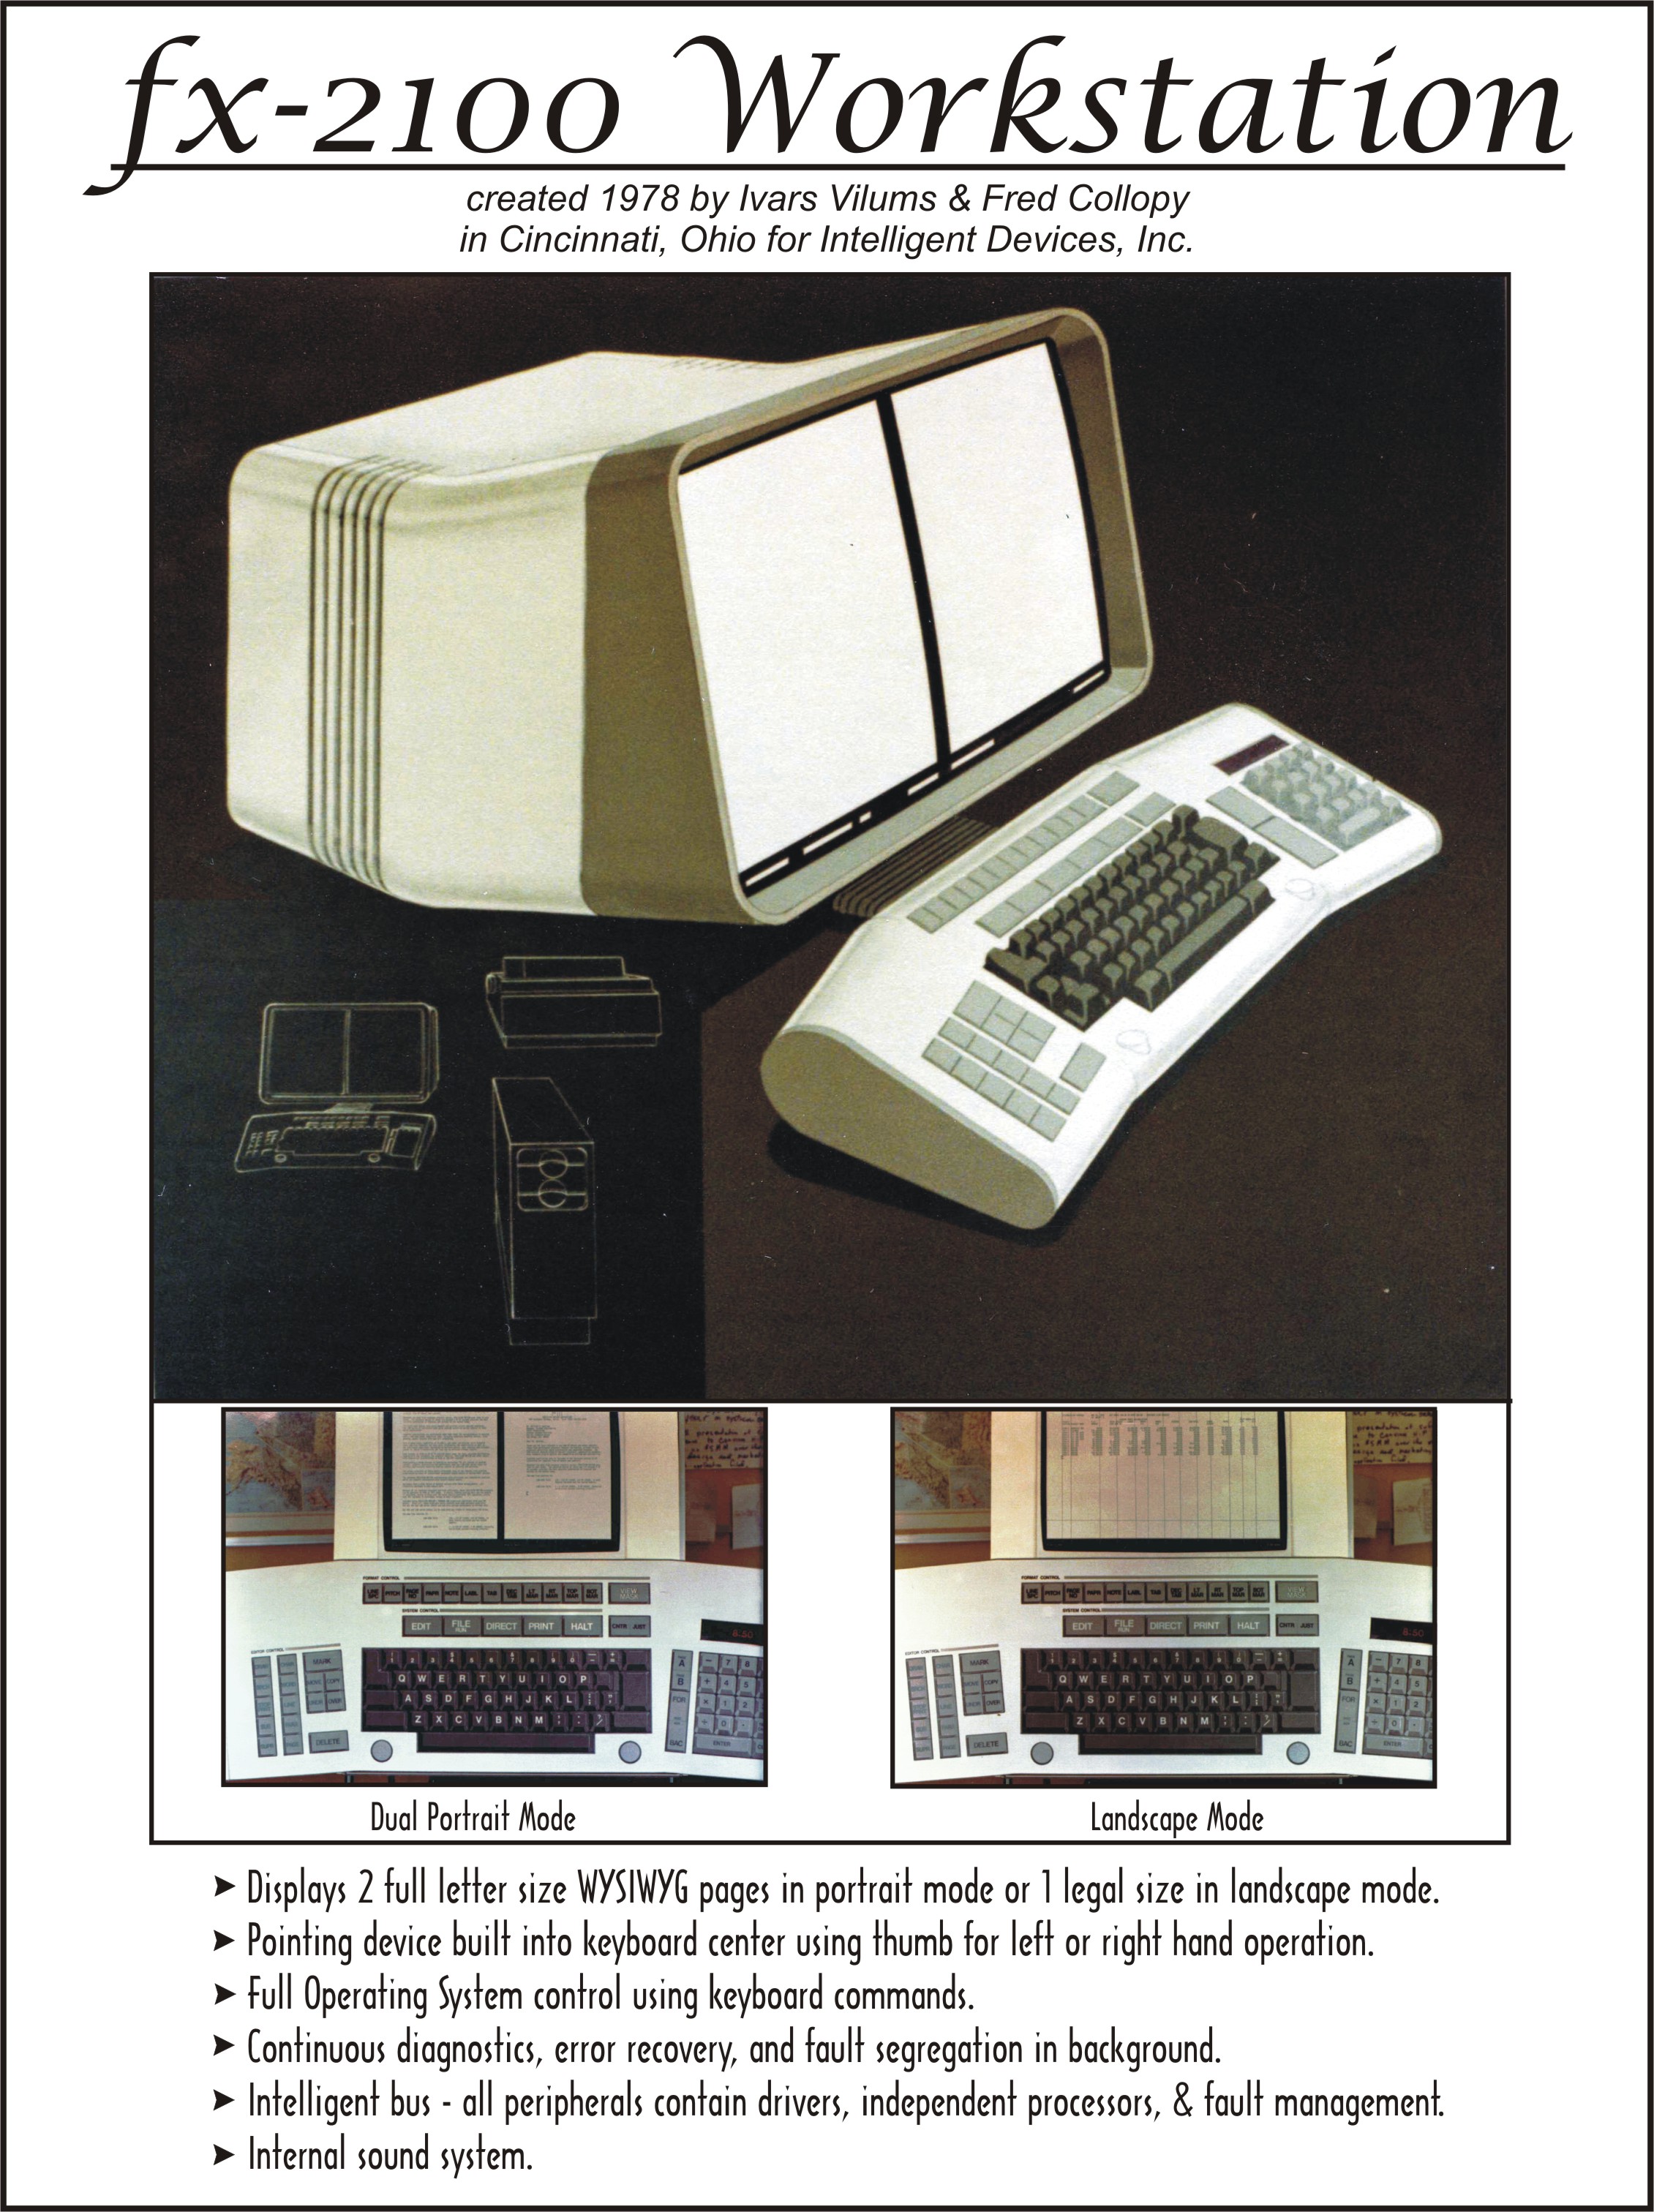 Poster of fx2100 PC., circa 1978